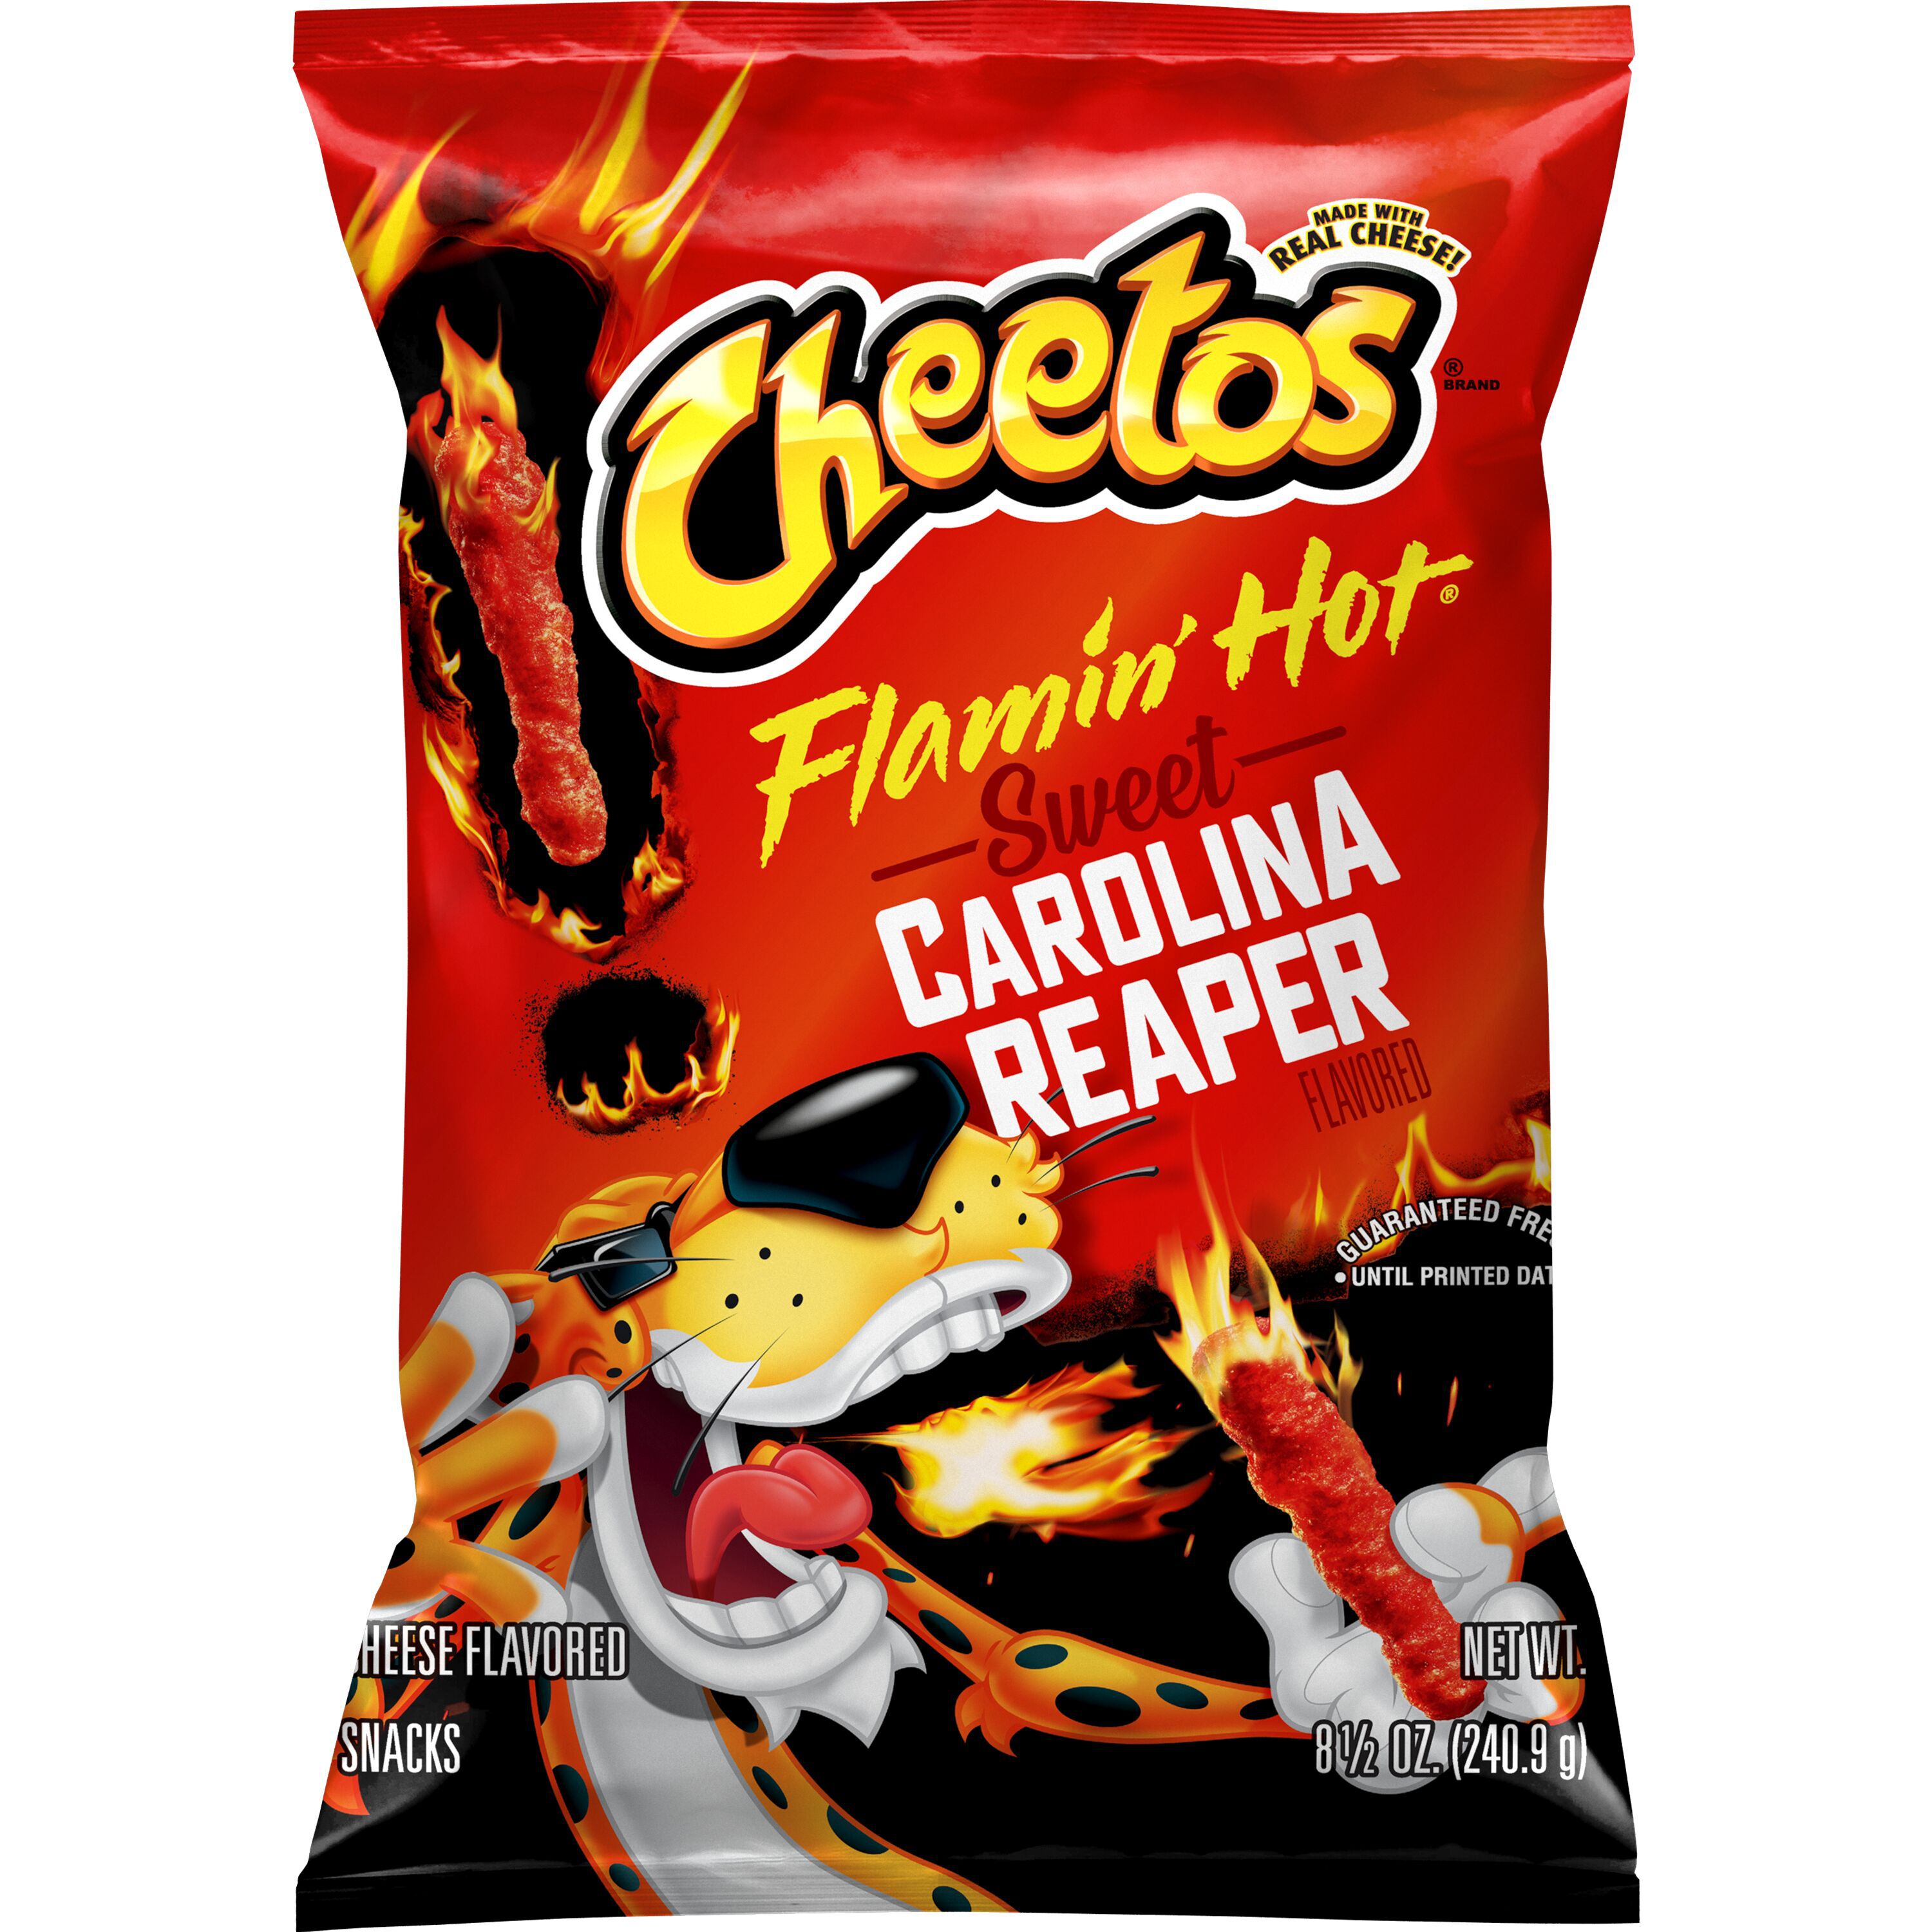 Cheetos, Flamin' Hot, Sweet Carolina Reaper Flavored, Cheese Flavored